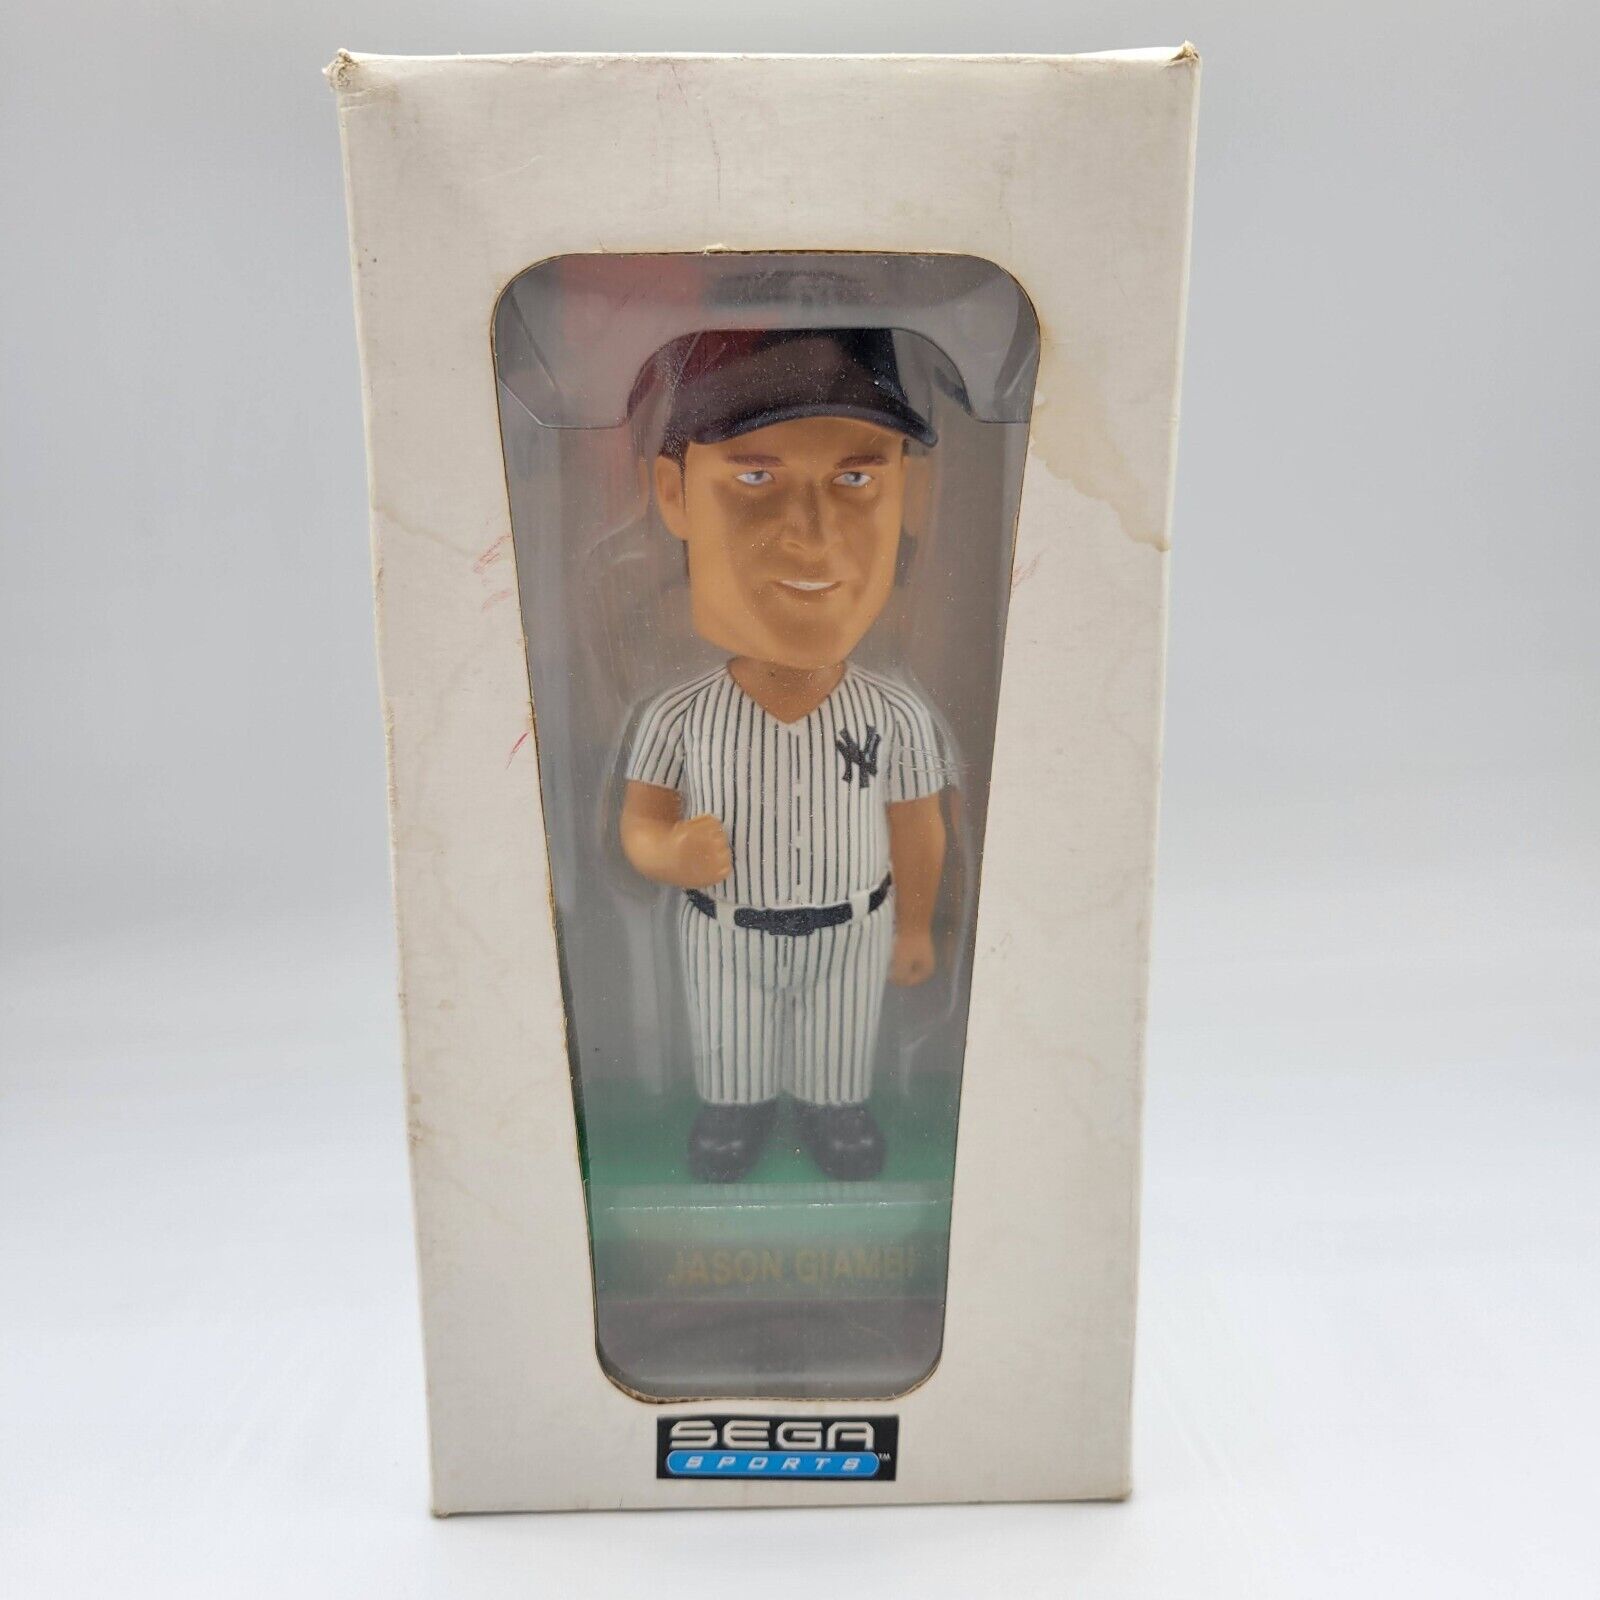 Jason Giambi New York Yankees Sega Sports Bobblehead MLB Baseball Collectibles